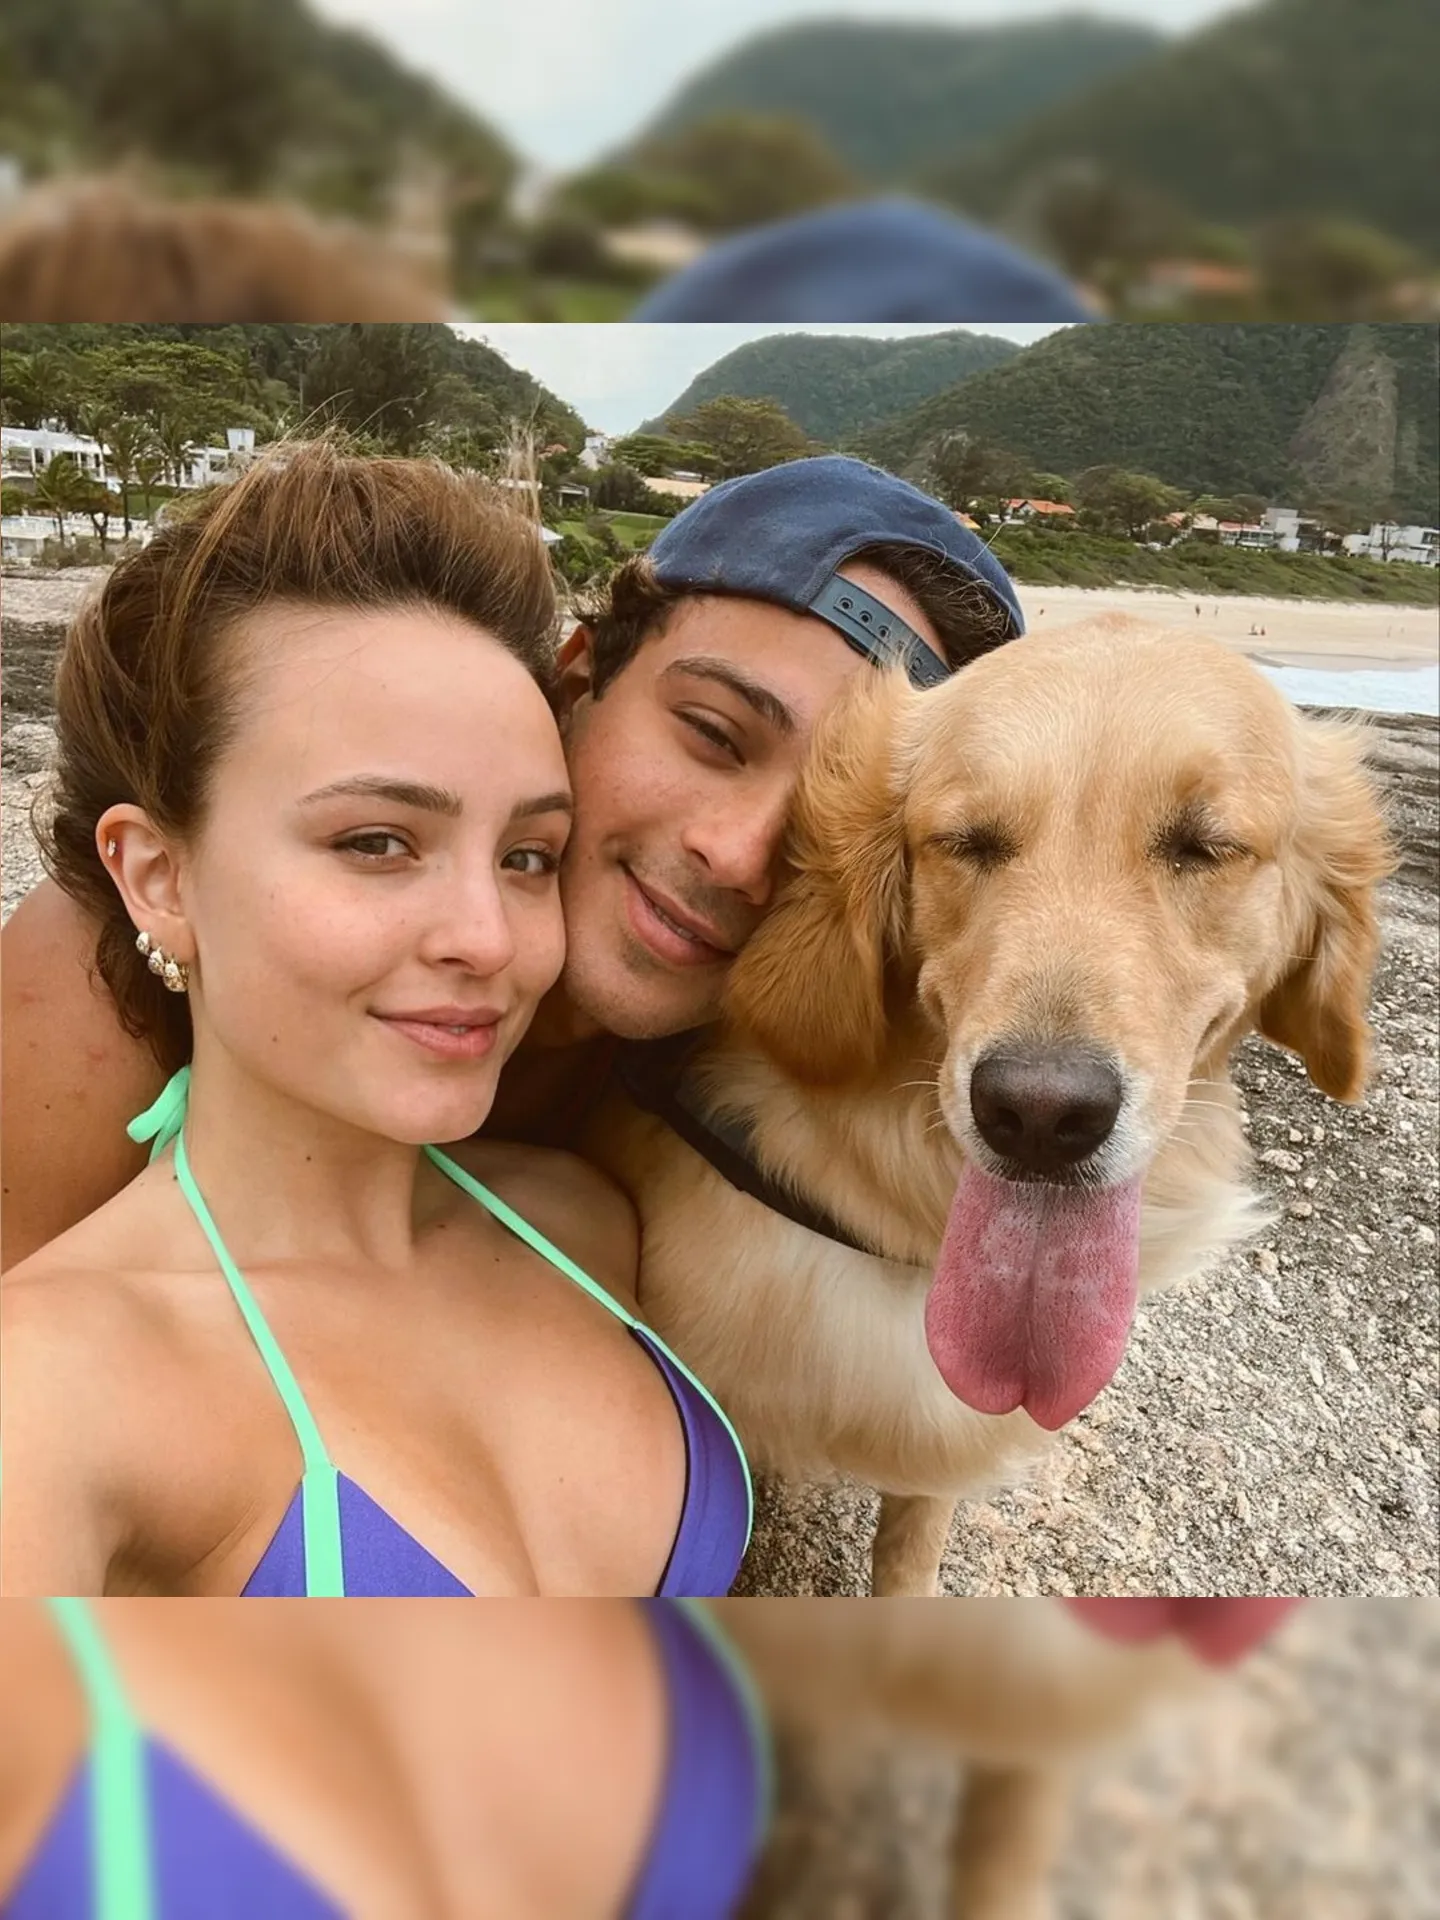 Larissa Manoela e seu namorado curtiram a praia de Itacoatiara, em Niterói, nesta sexta-feira (21)